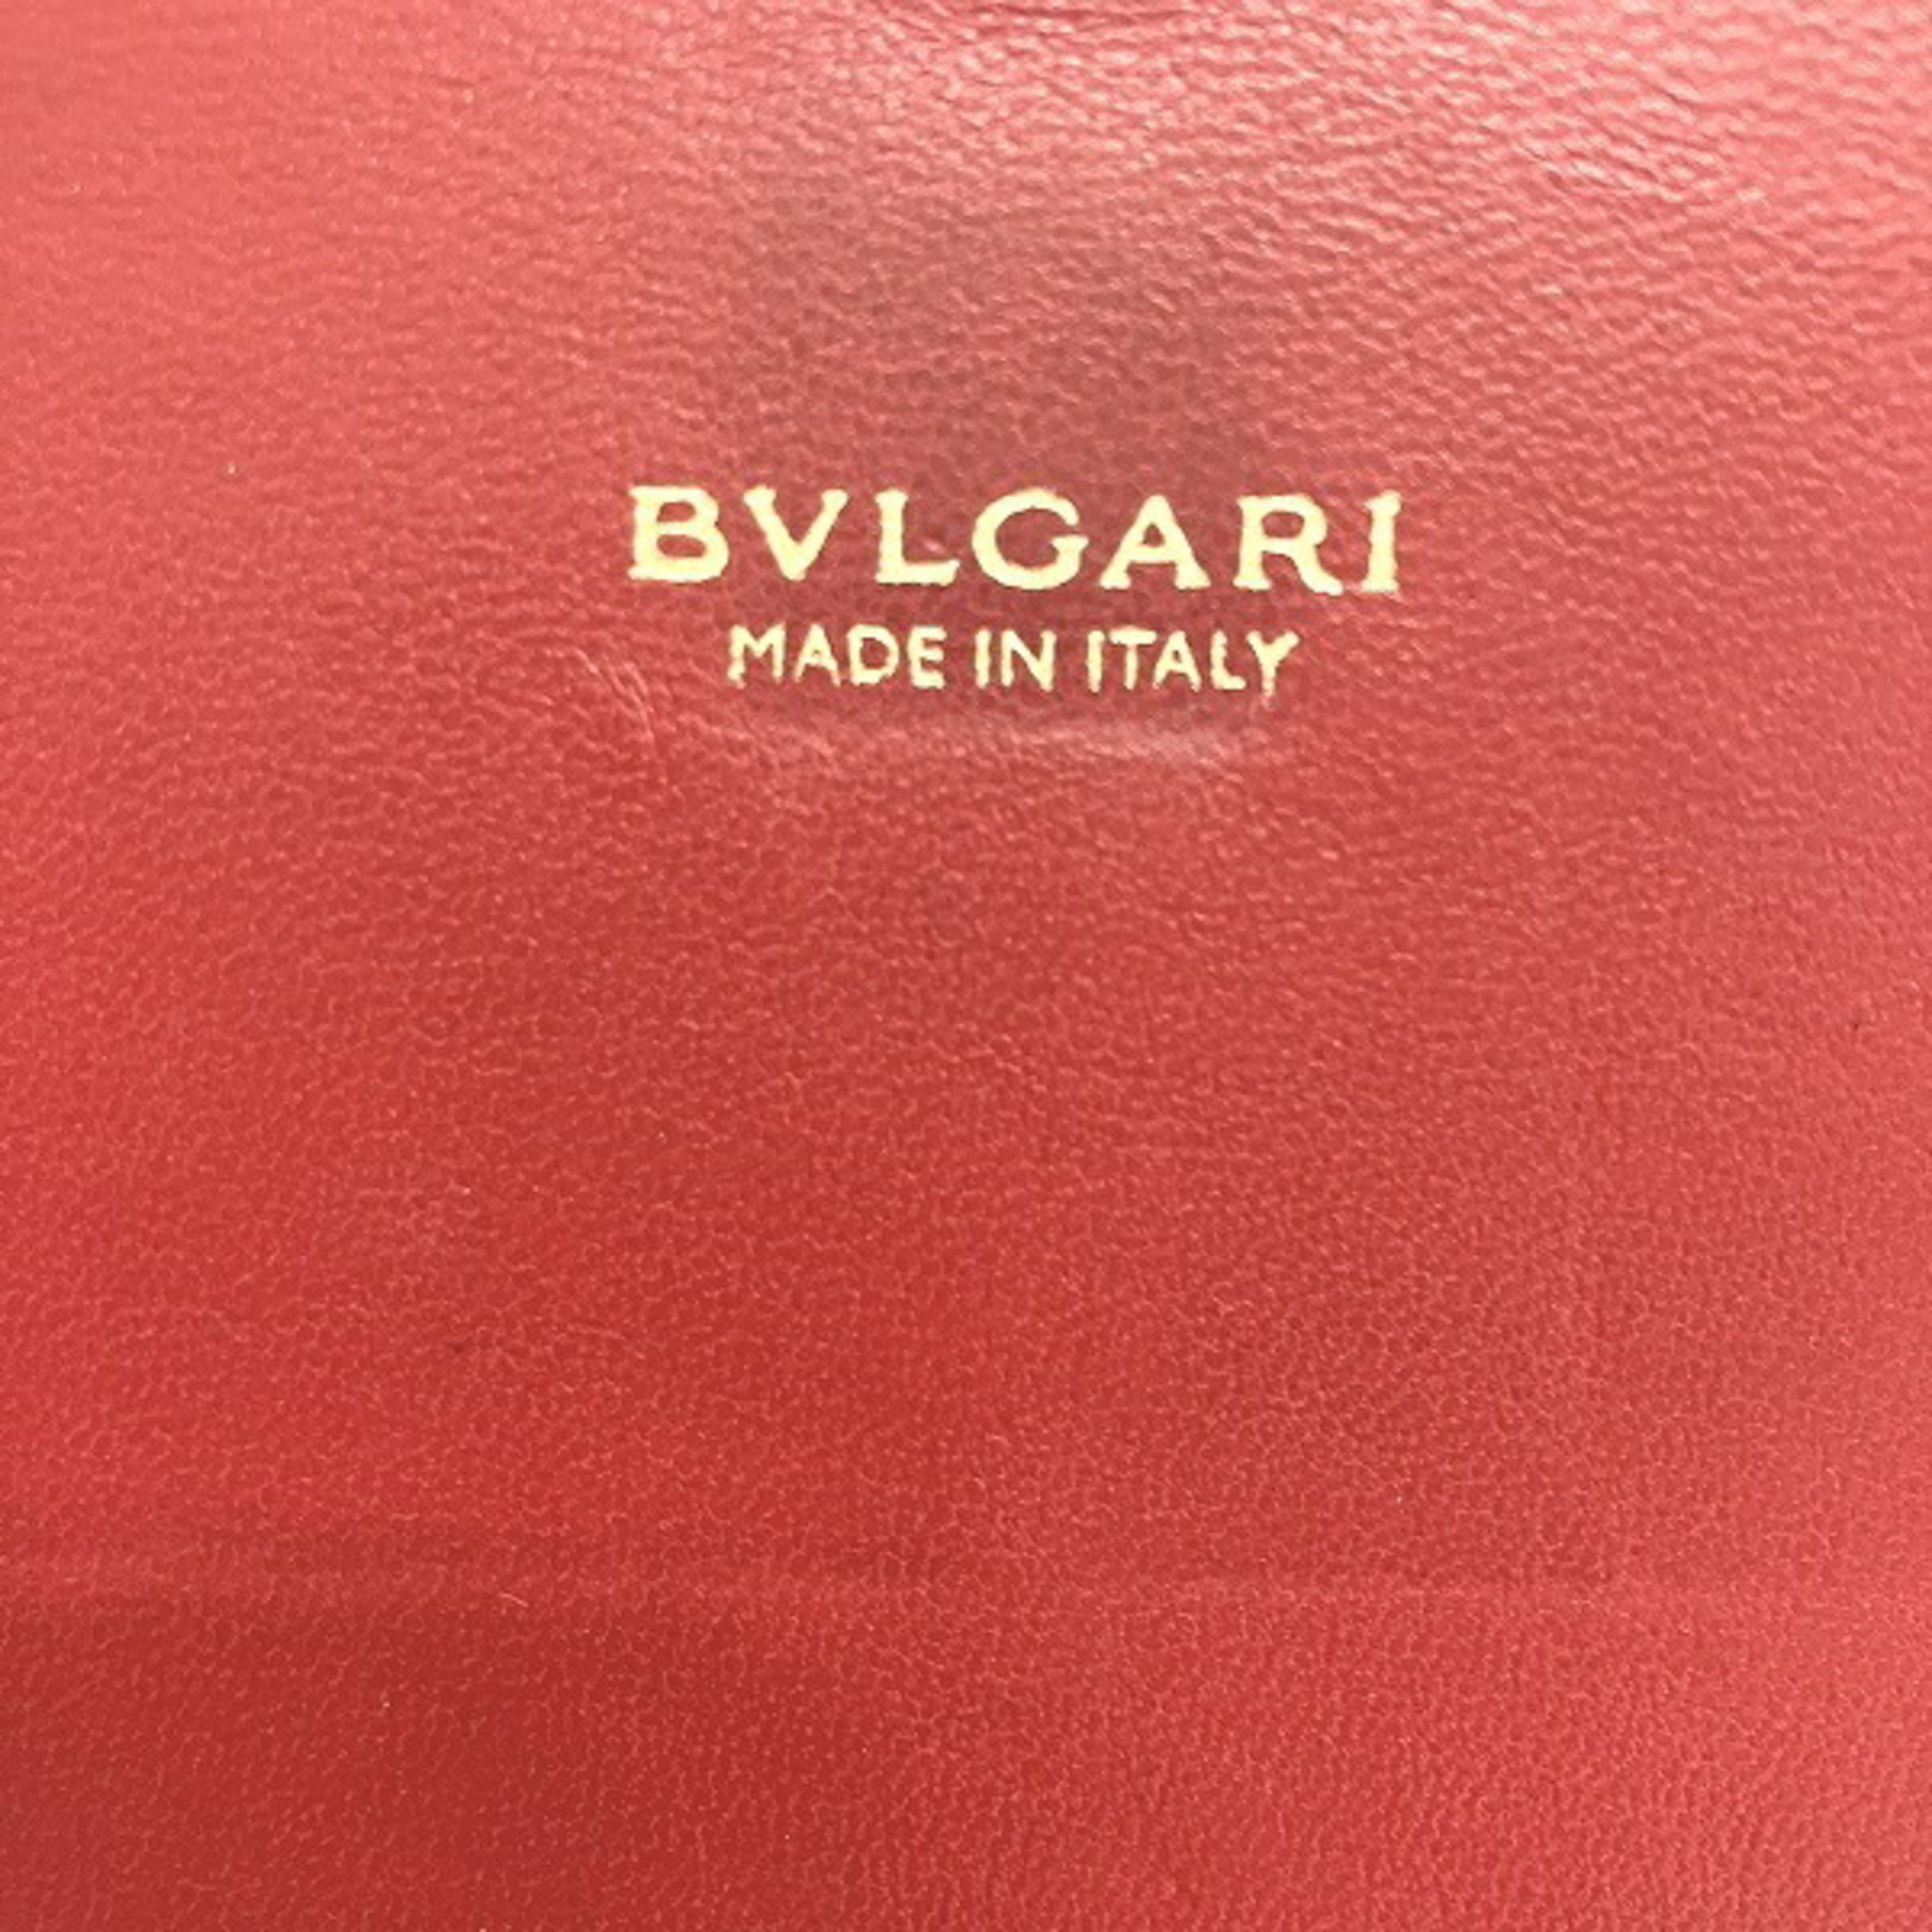 BVLGARI Logo Clip 281438 Wallet Bifold Women's